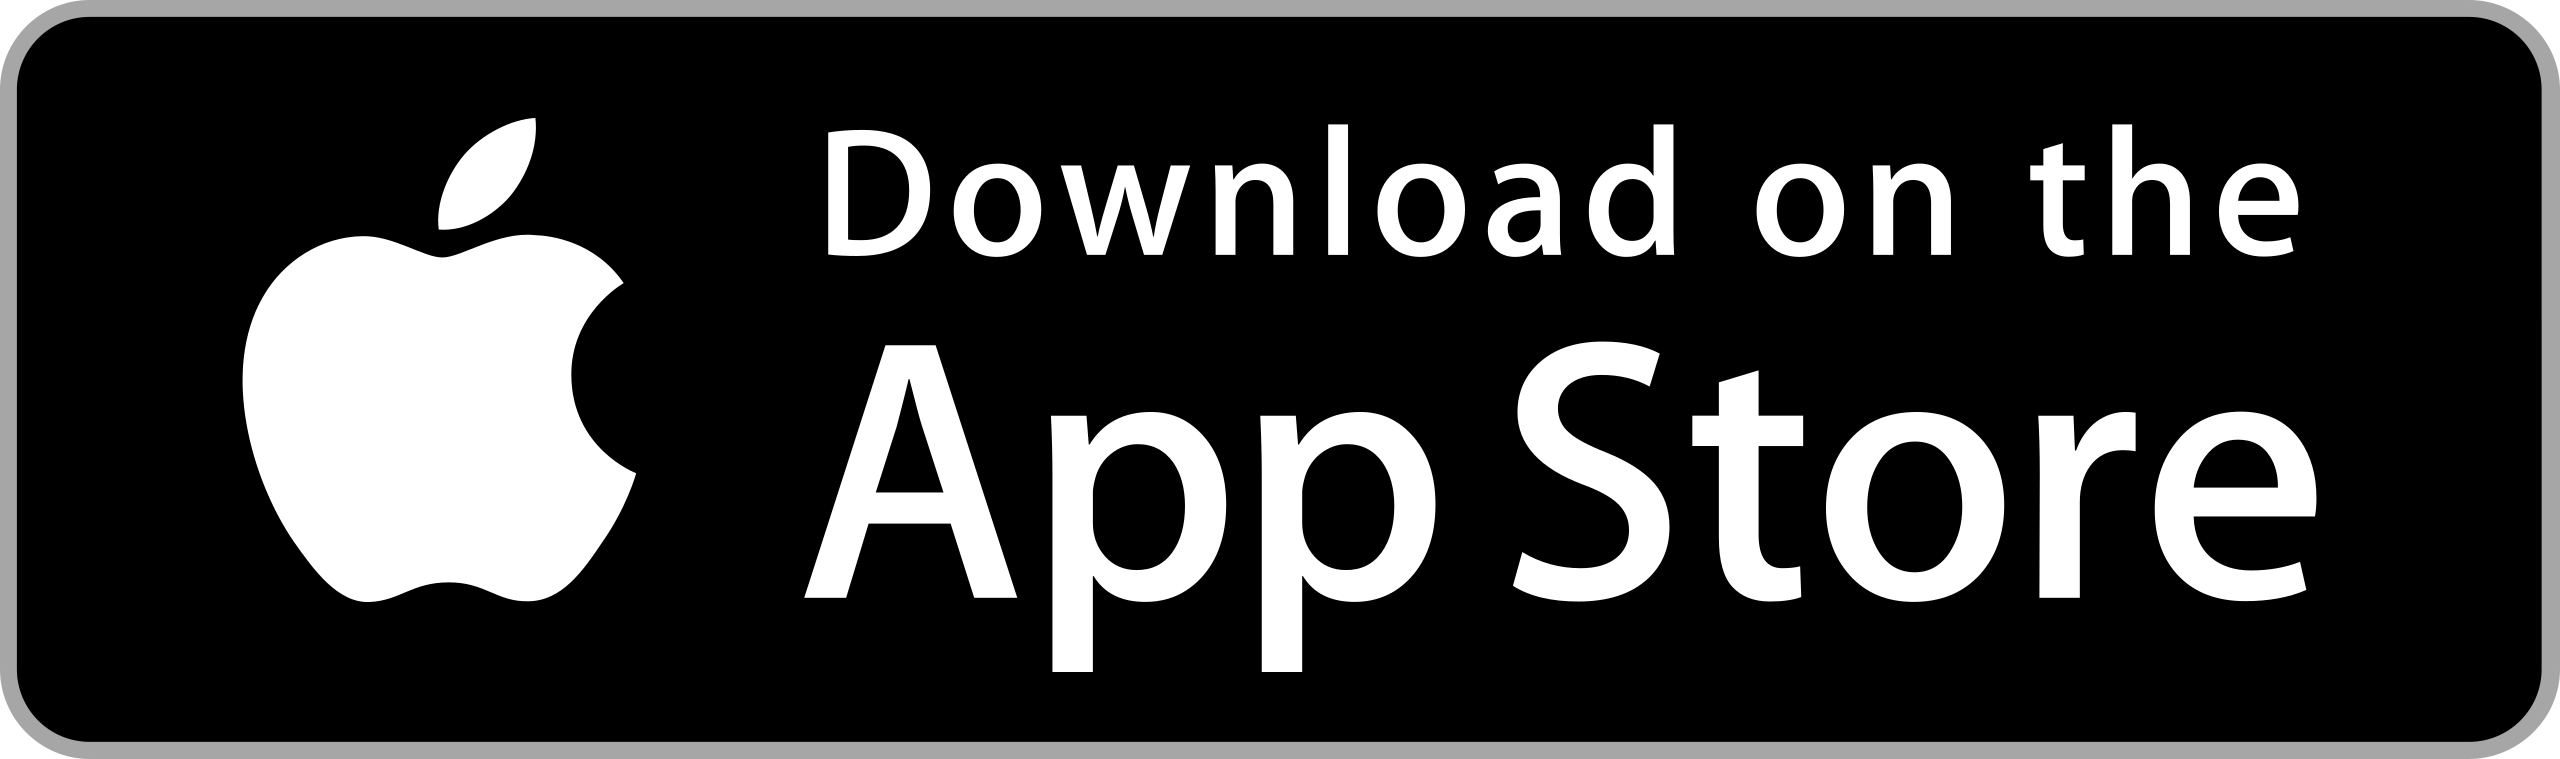 Navigate app store download